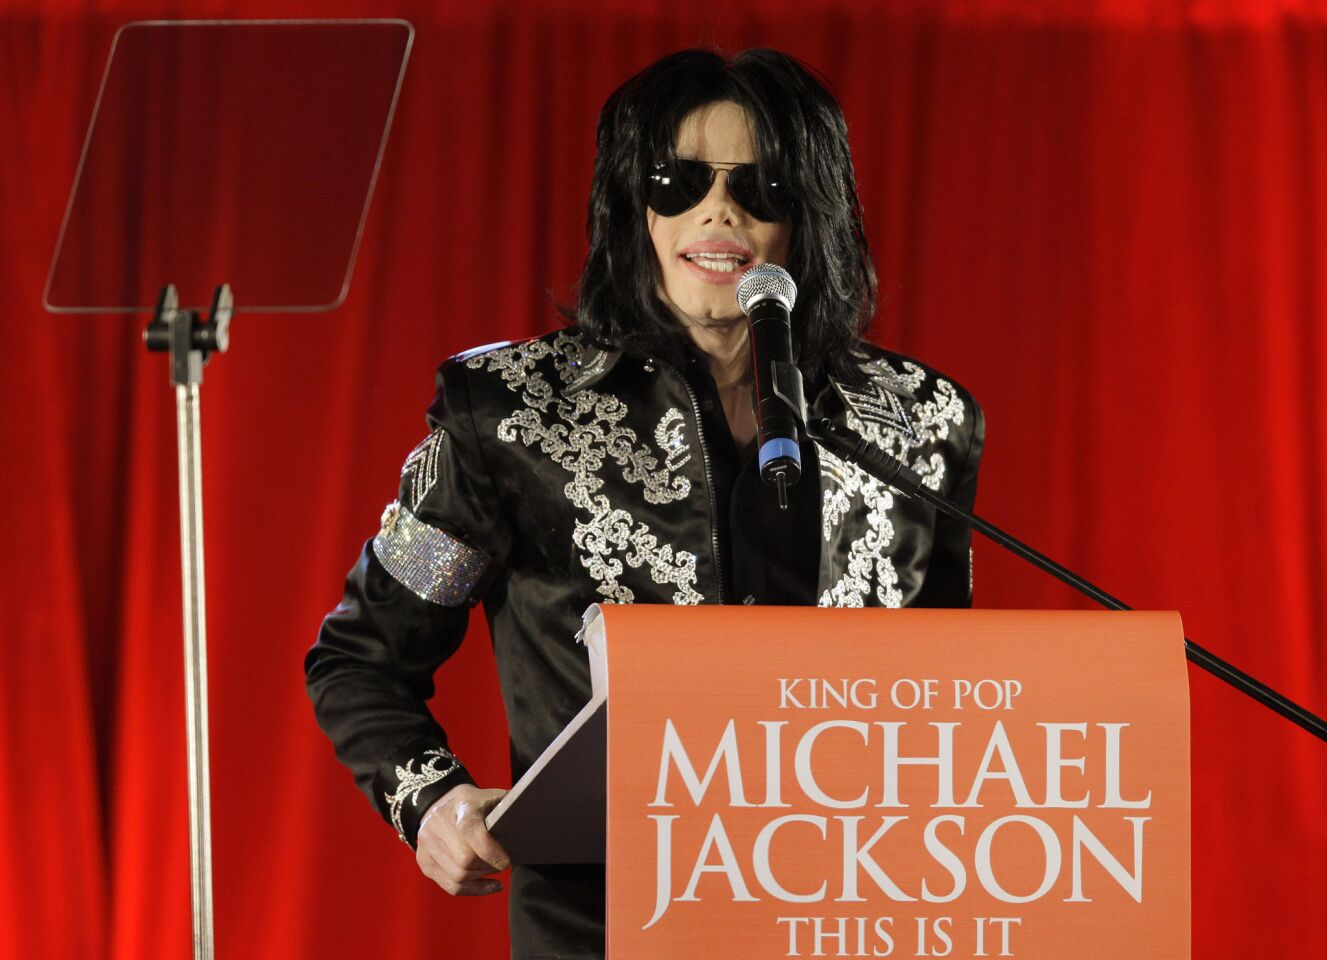 Michael Jackson wrongful-death case